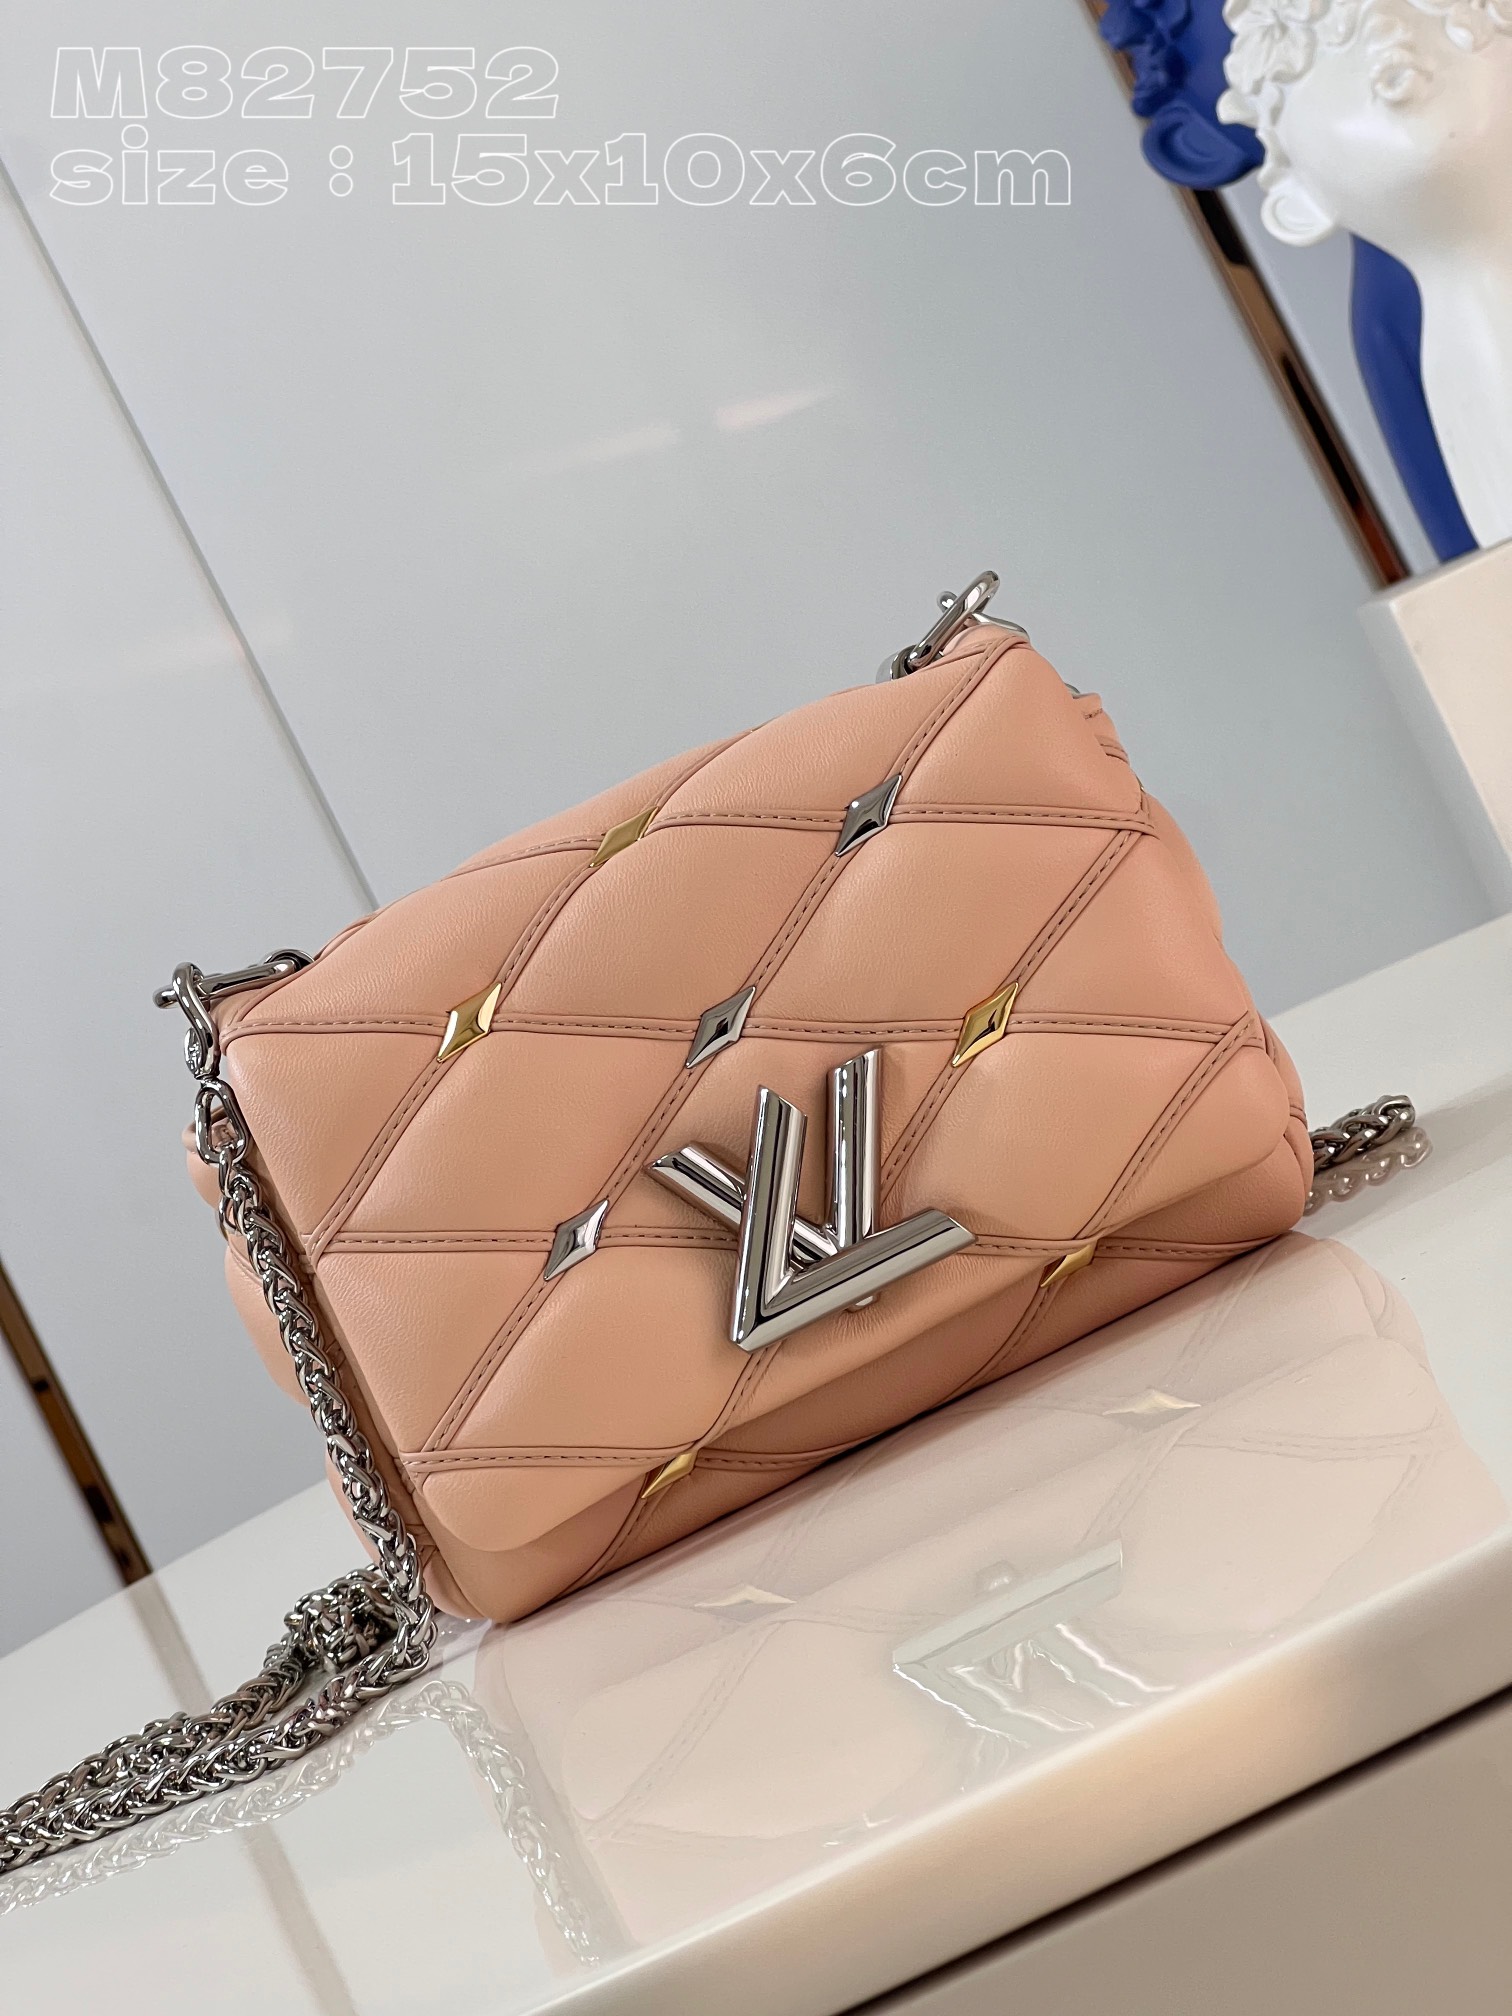 AAA+
 Louis Vuitton Bags Handbags Black Sheepskin LV Twist M82752